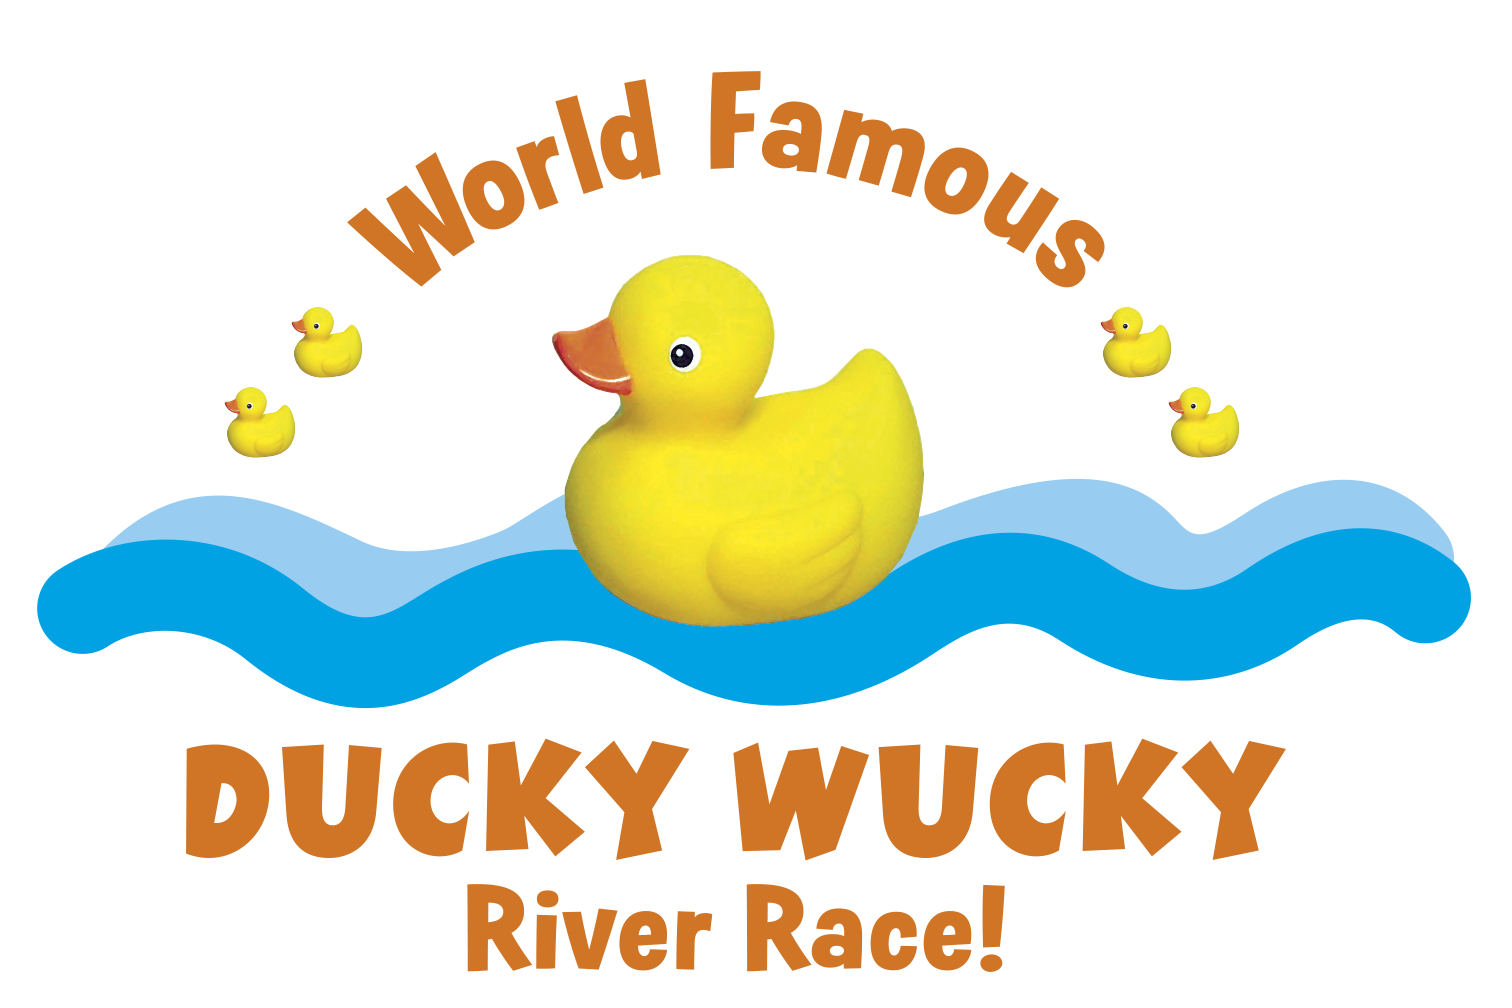 Ducky Wucky River Race